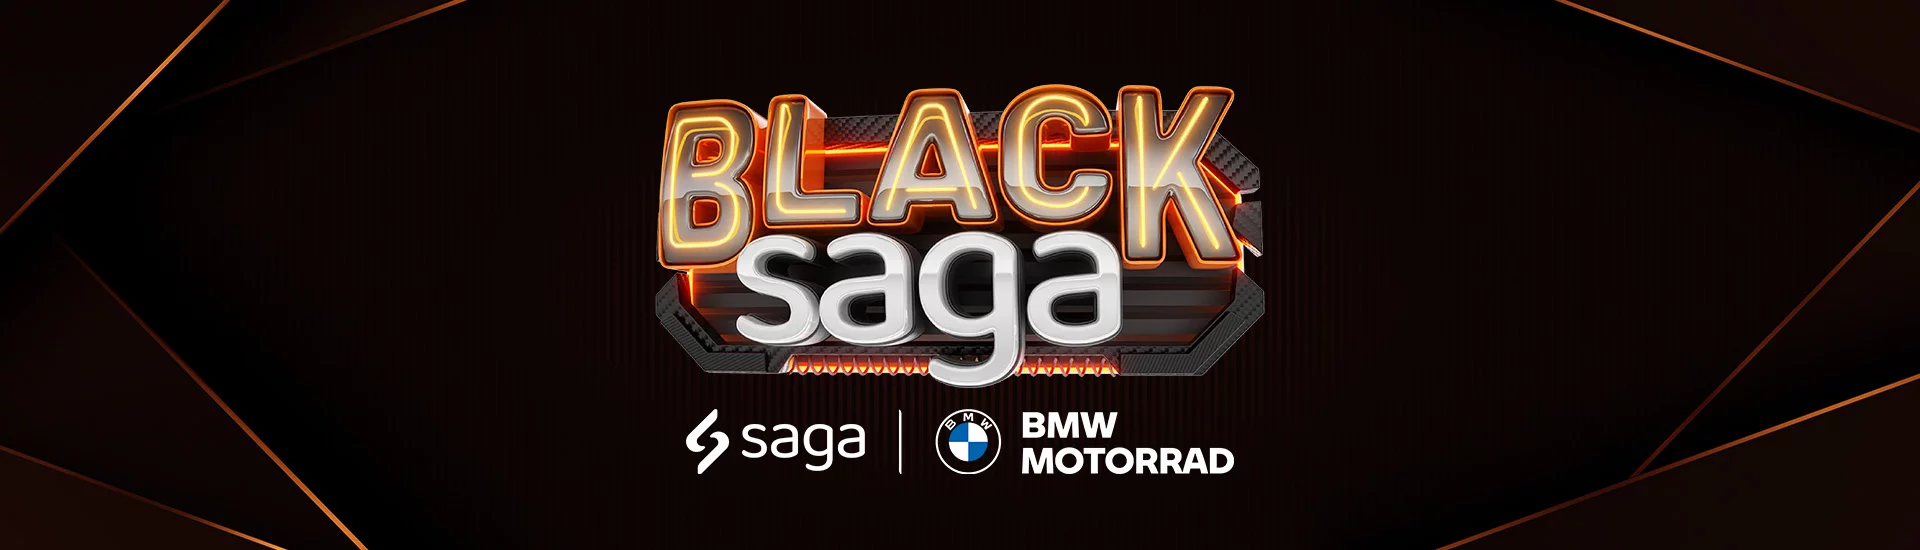 black friday saga bmw motorrad